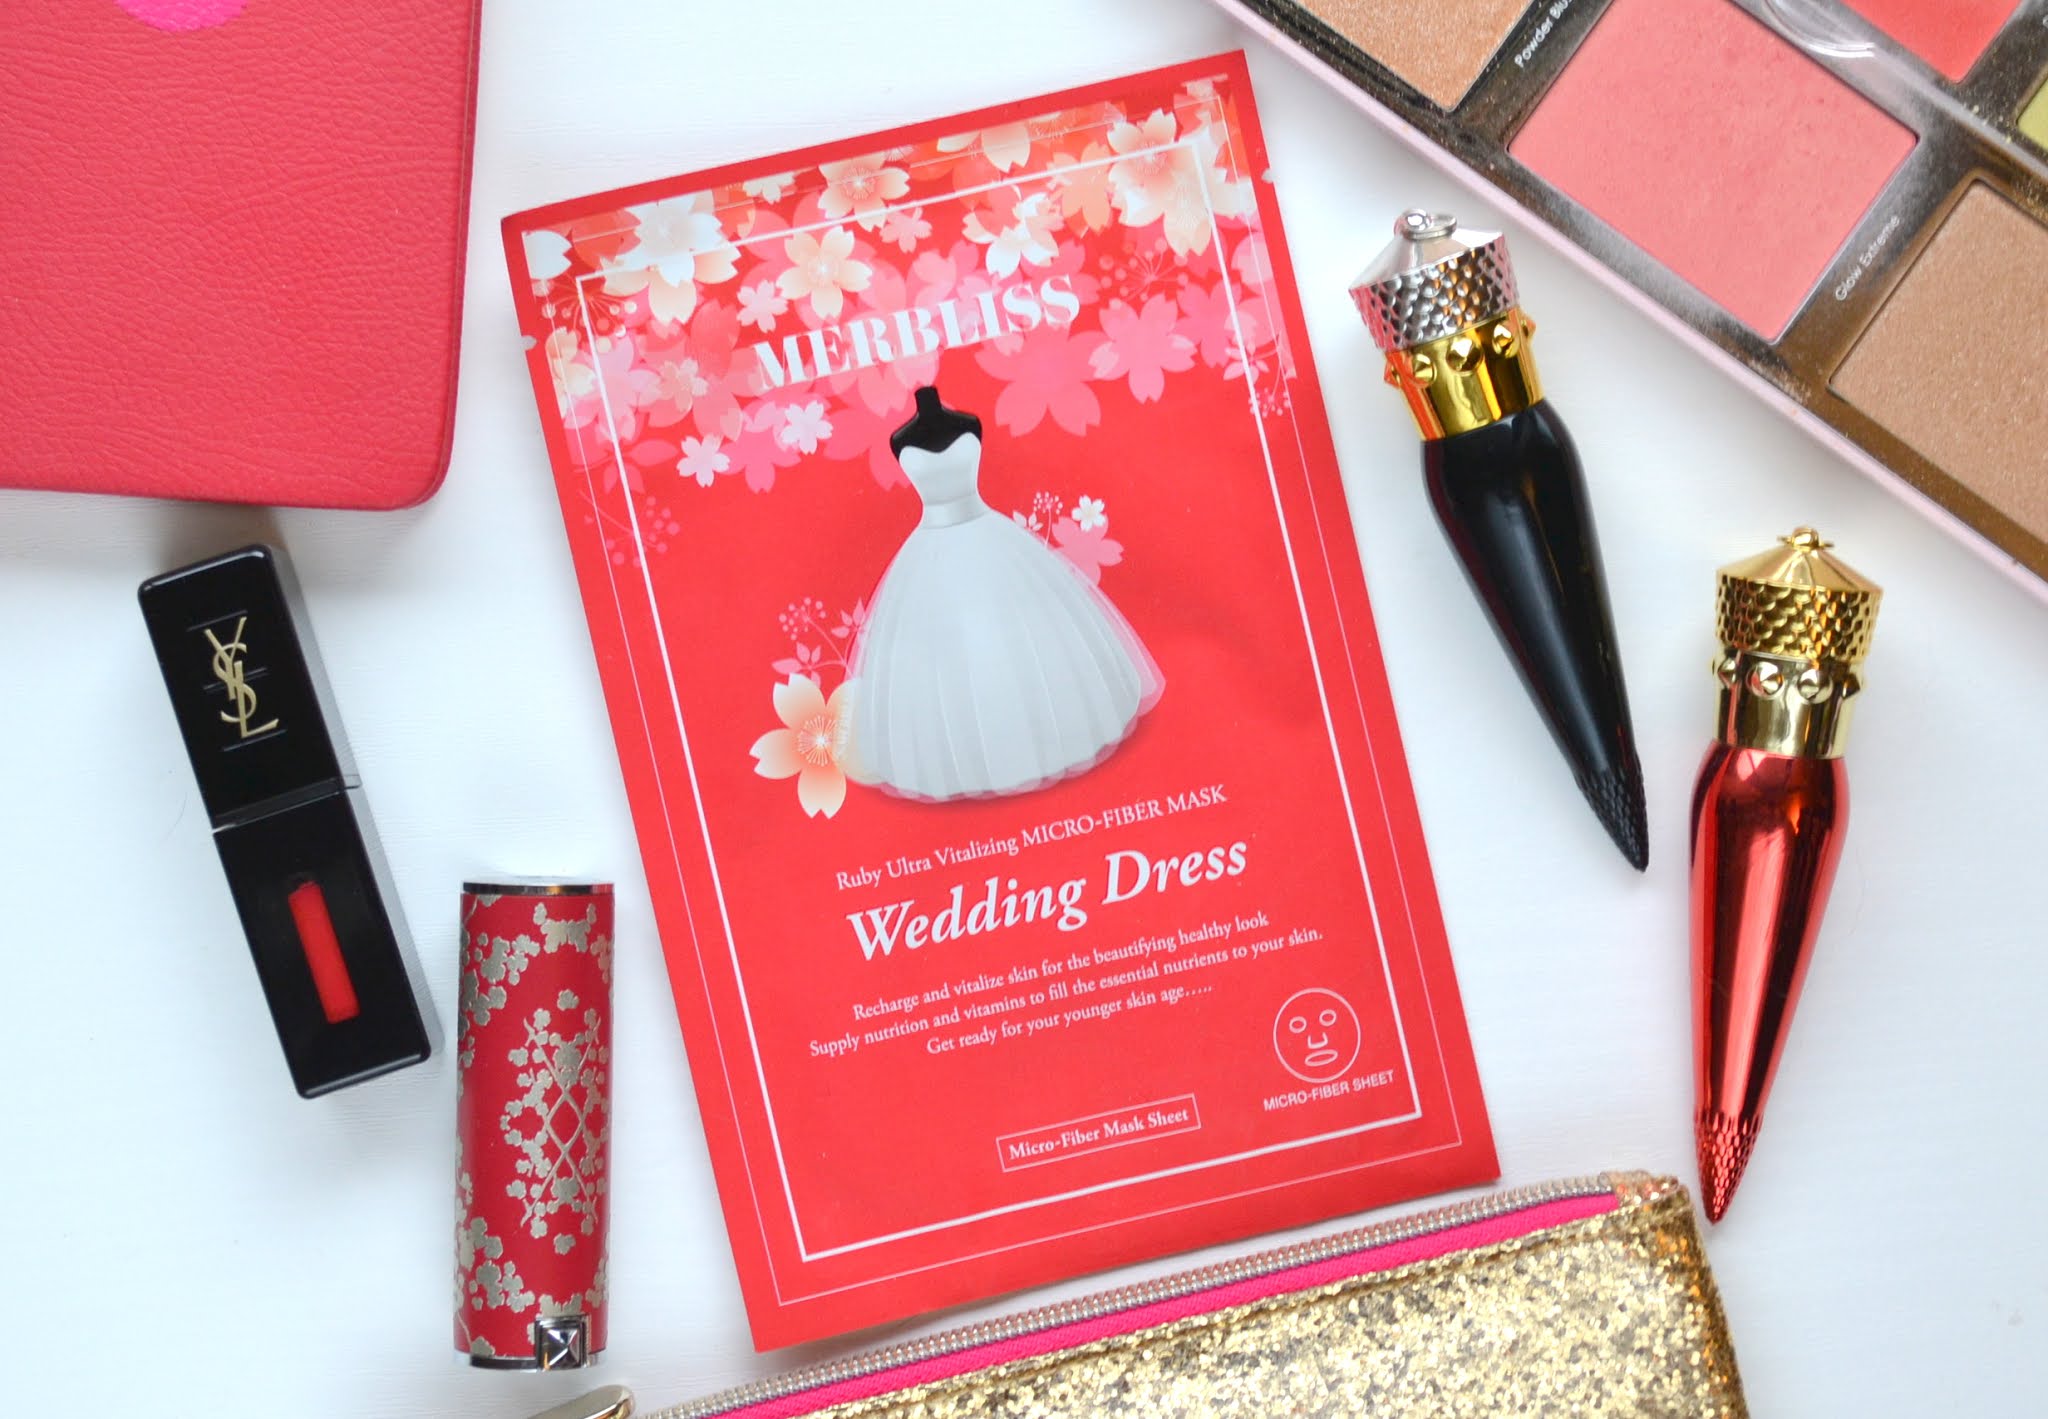 SHEET MASK | Merbliss Wedding Dress Ruby Ultra Vitalizing Micro Fiber